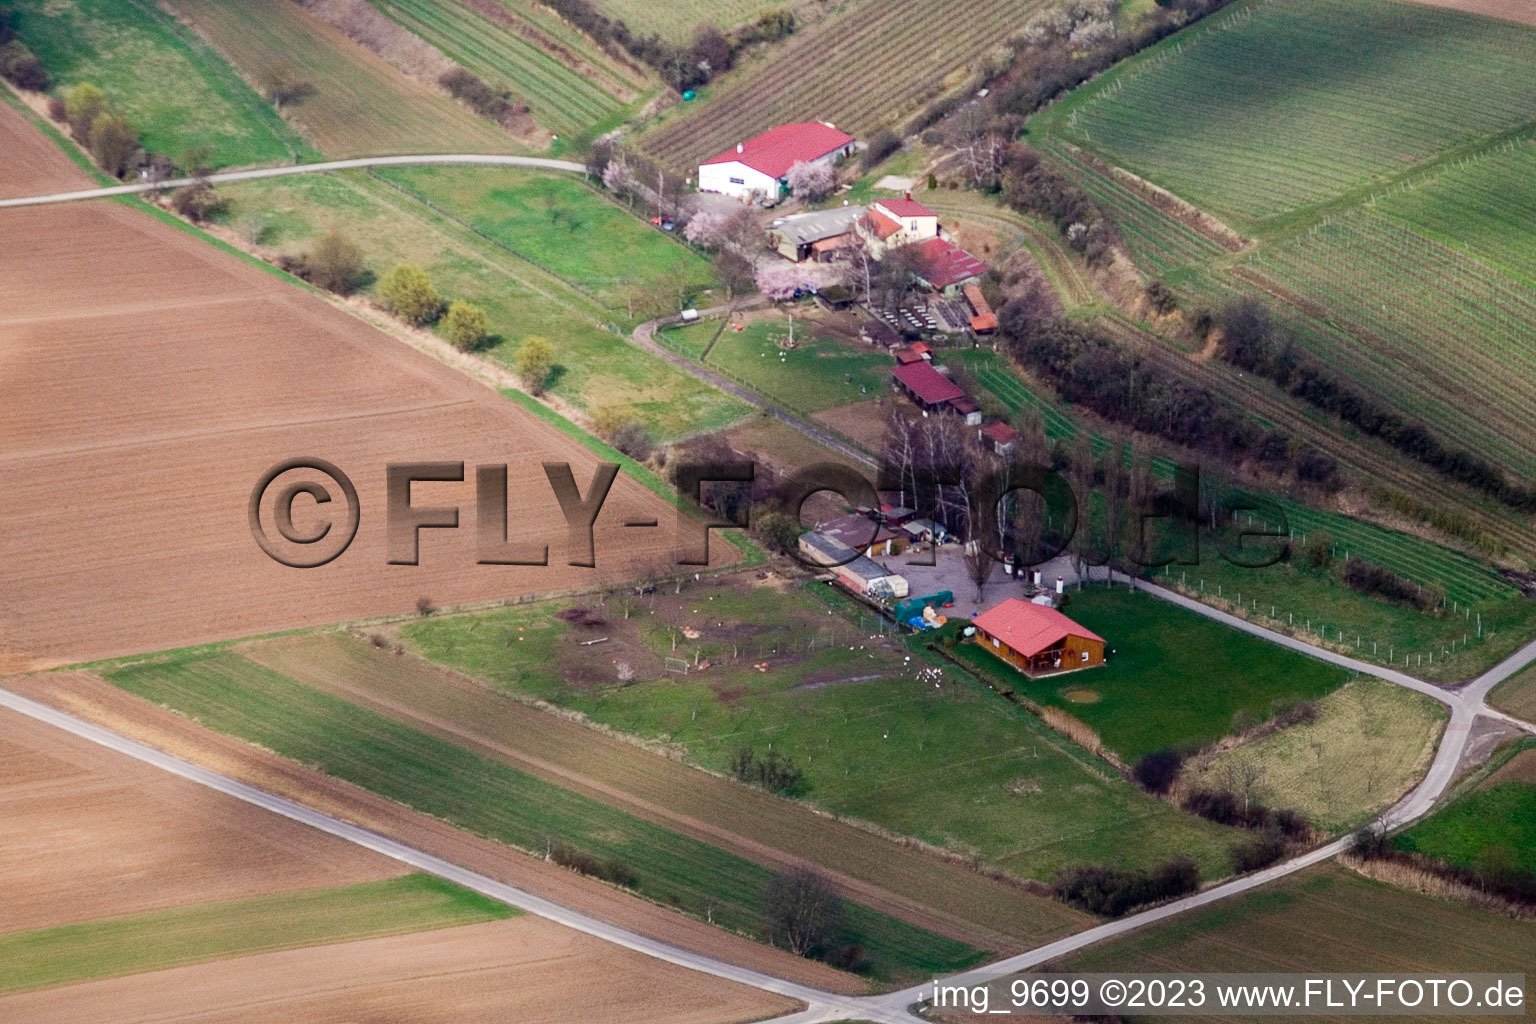 Aerial view of Wagner Ranch in the district Herxheim in Herxheim bei Landau/Pfalz in the state Rhineland-Palatinate, Germany